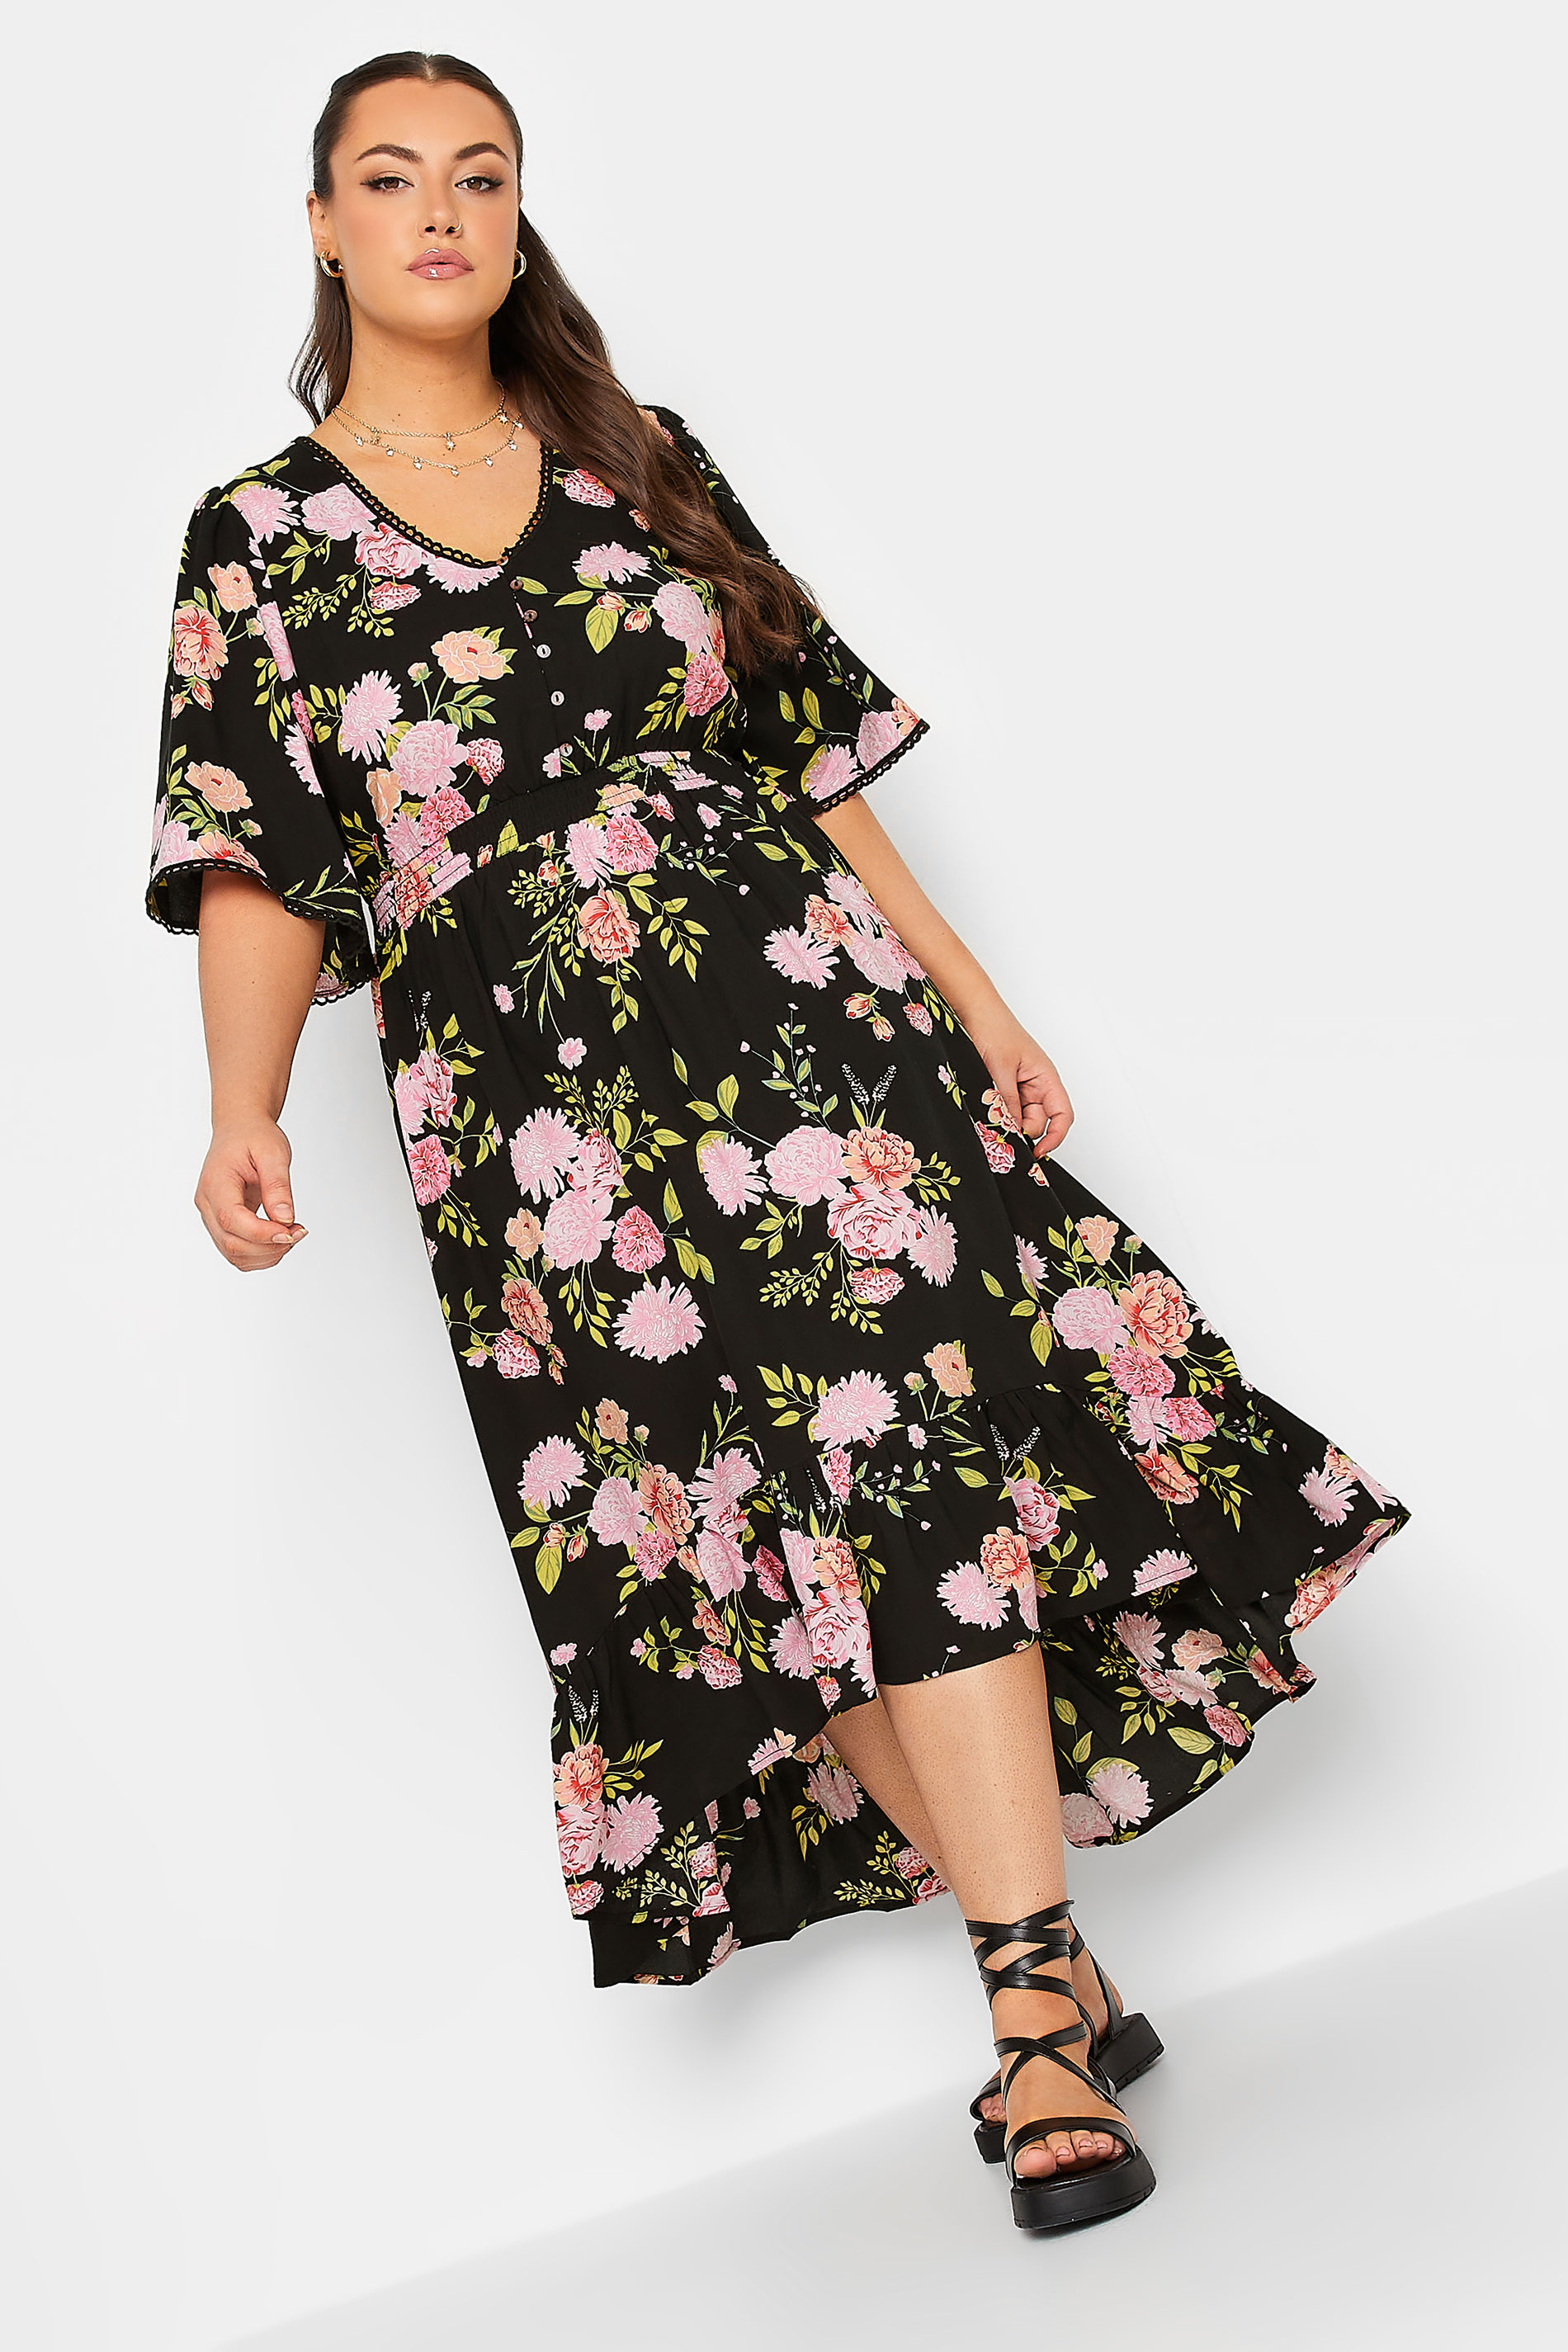 YOURS Curve Plus Size Black Floral Maxi Dress | Yours Clothing  1